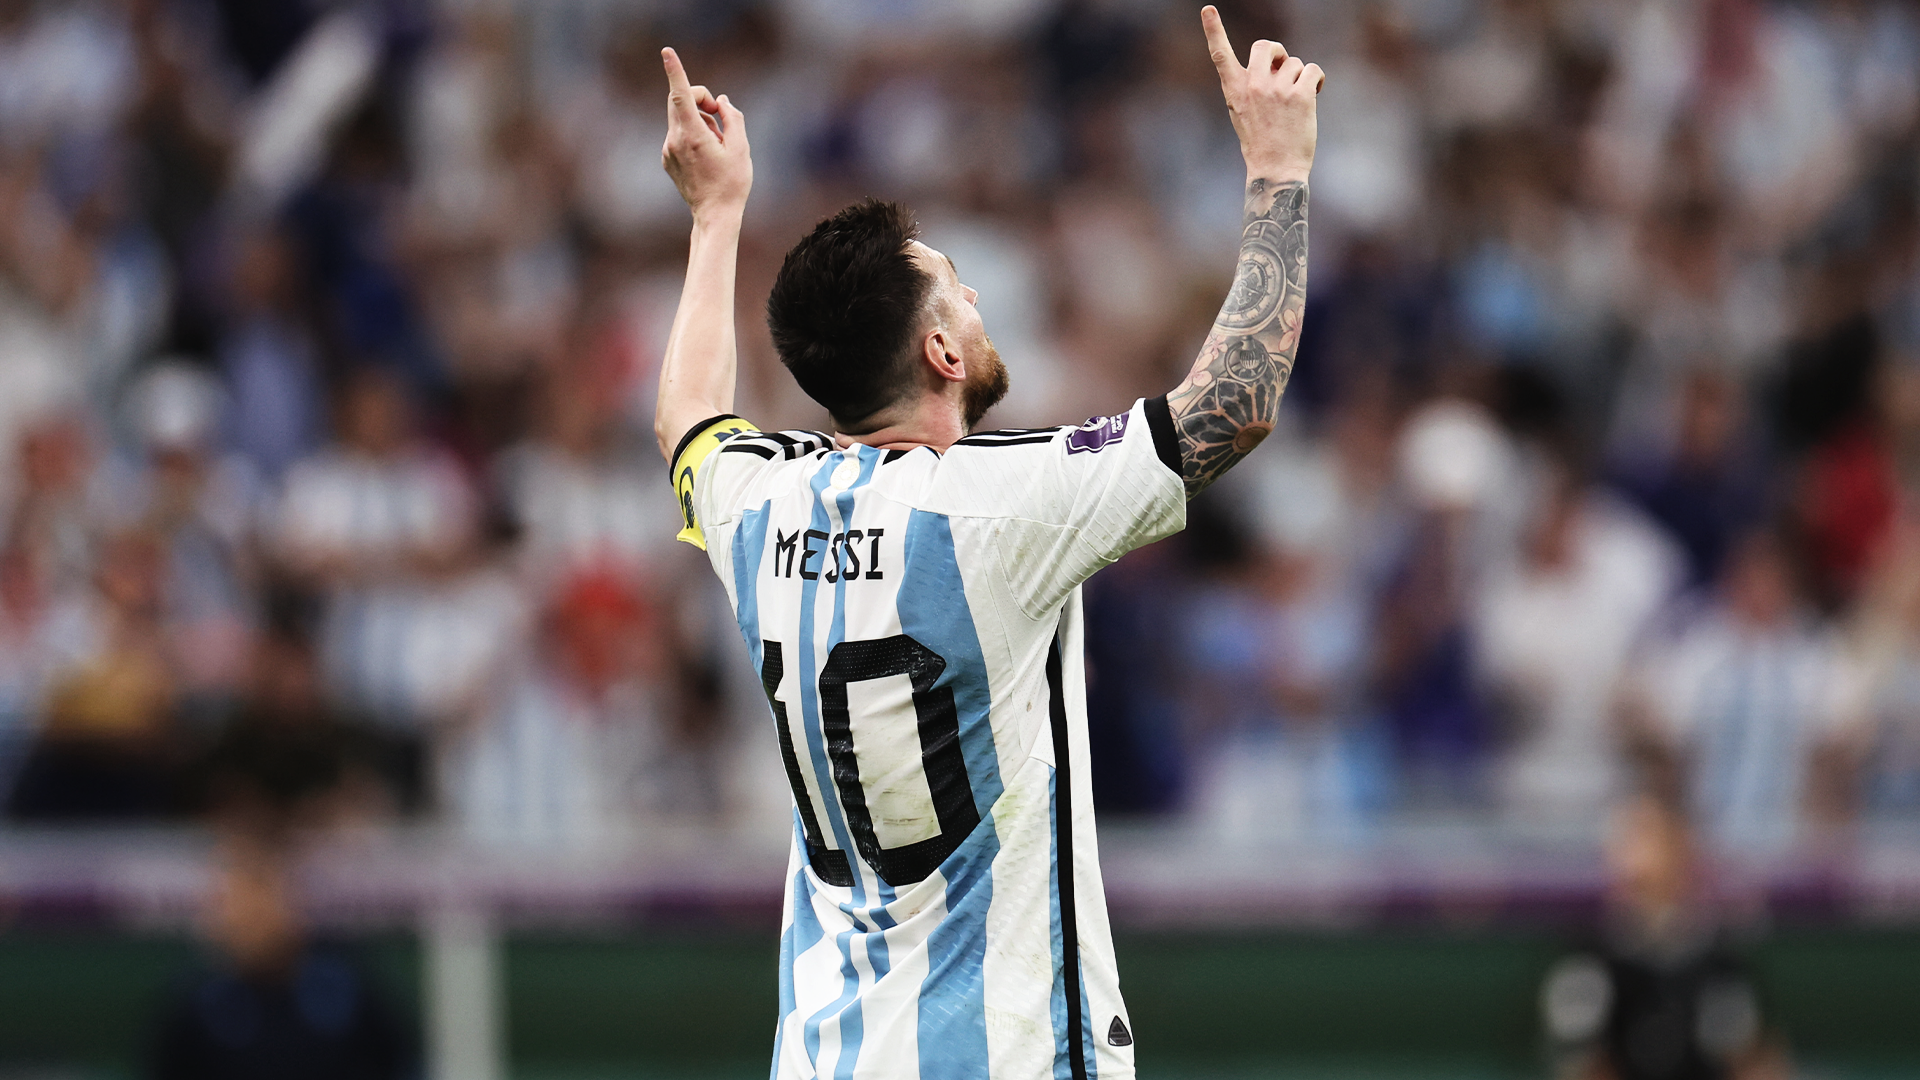 7680x4320 Resolution Lionel Messi Argentina 8K Wallpaper - Wallpapers Den